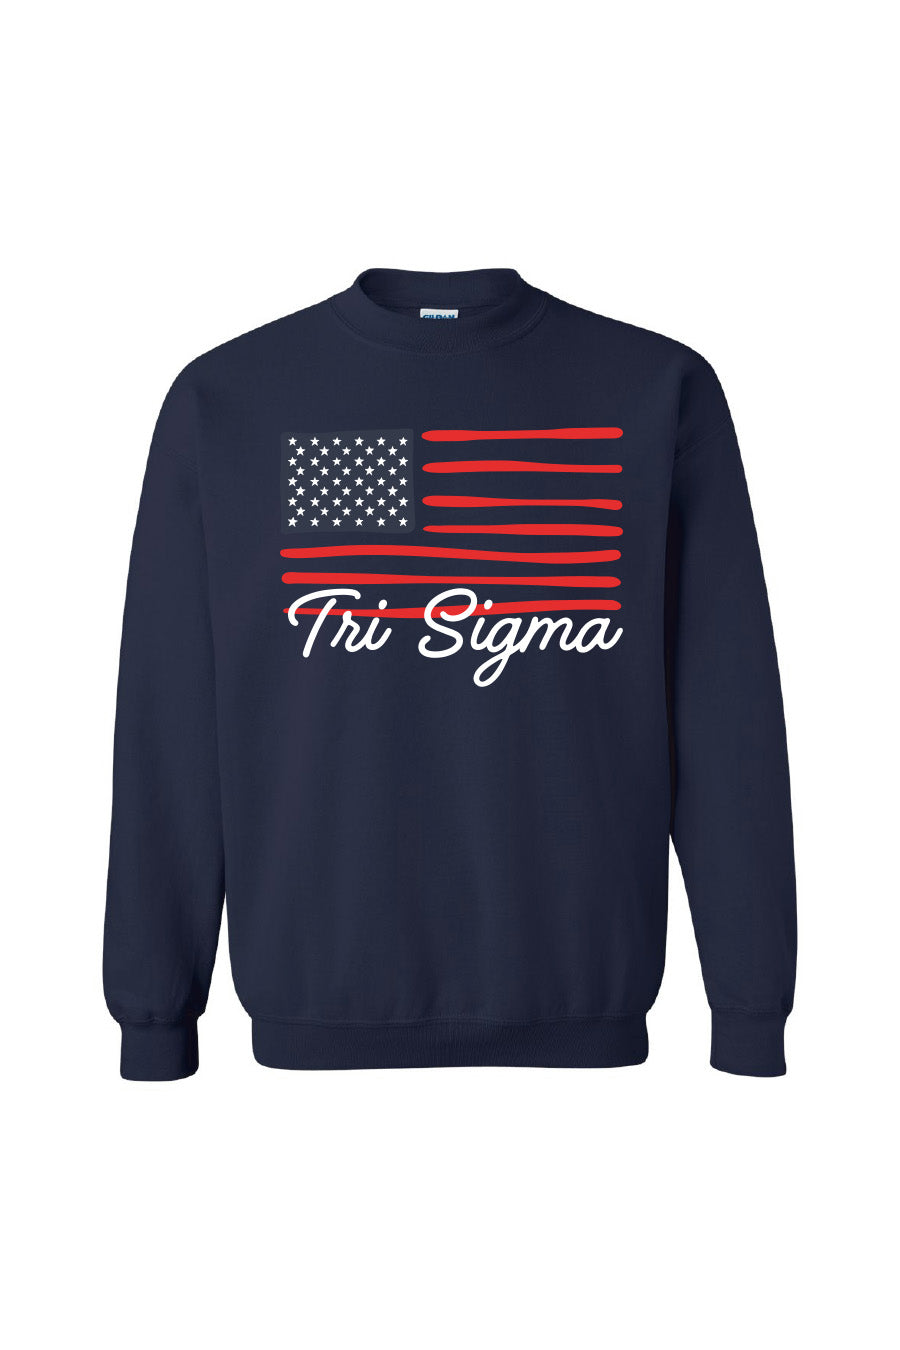 Home of the Tri Sigma Sweatshirt